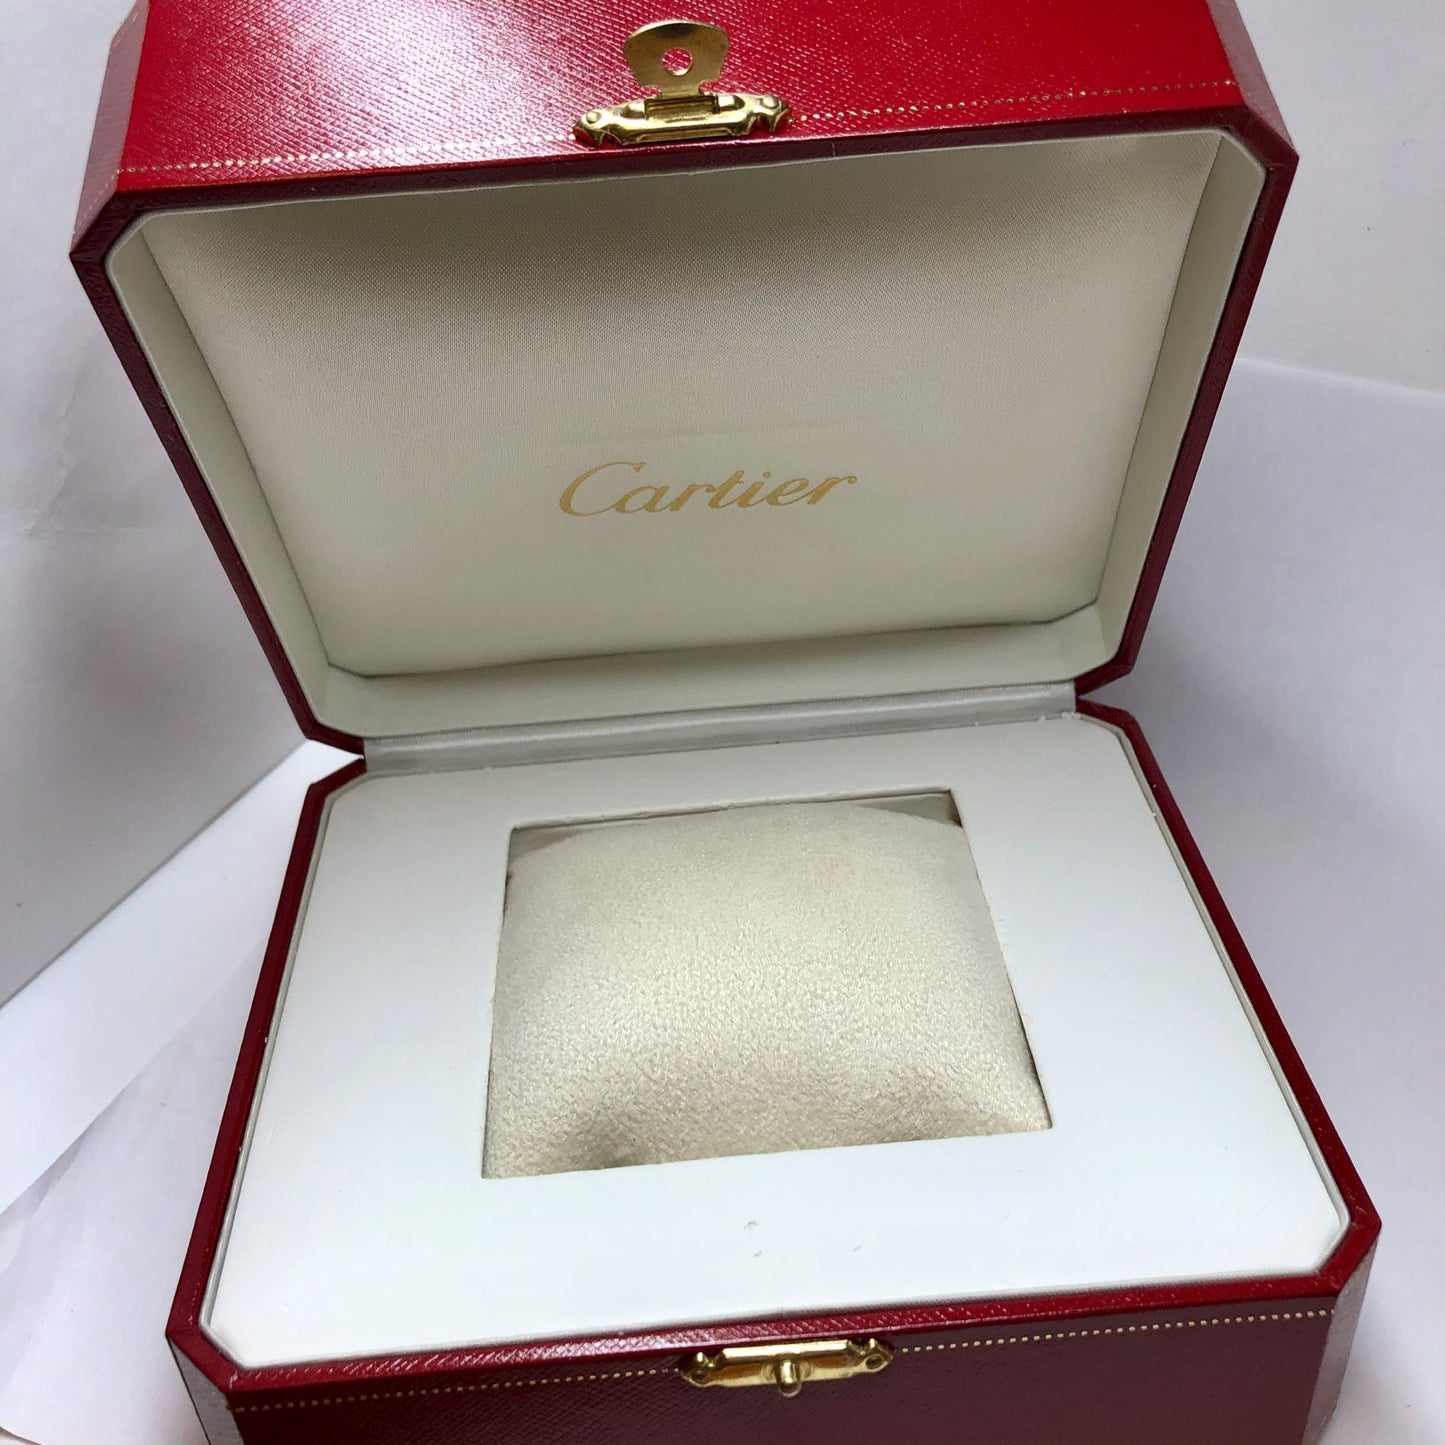 Cream Faux Suede PILLOW CUSHION for Cartier Piaget etc Box